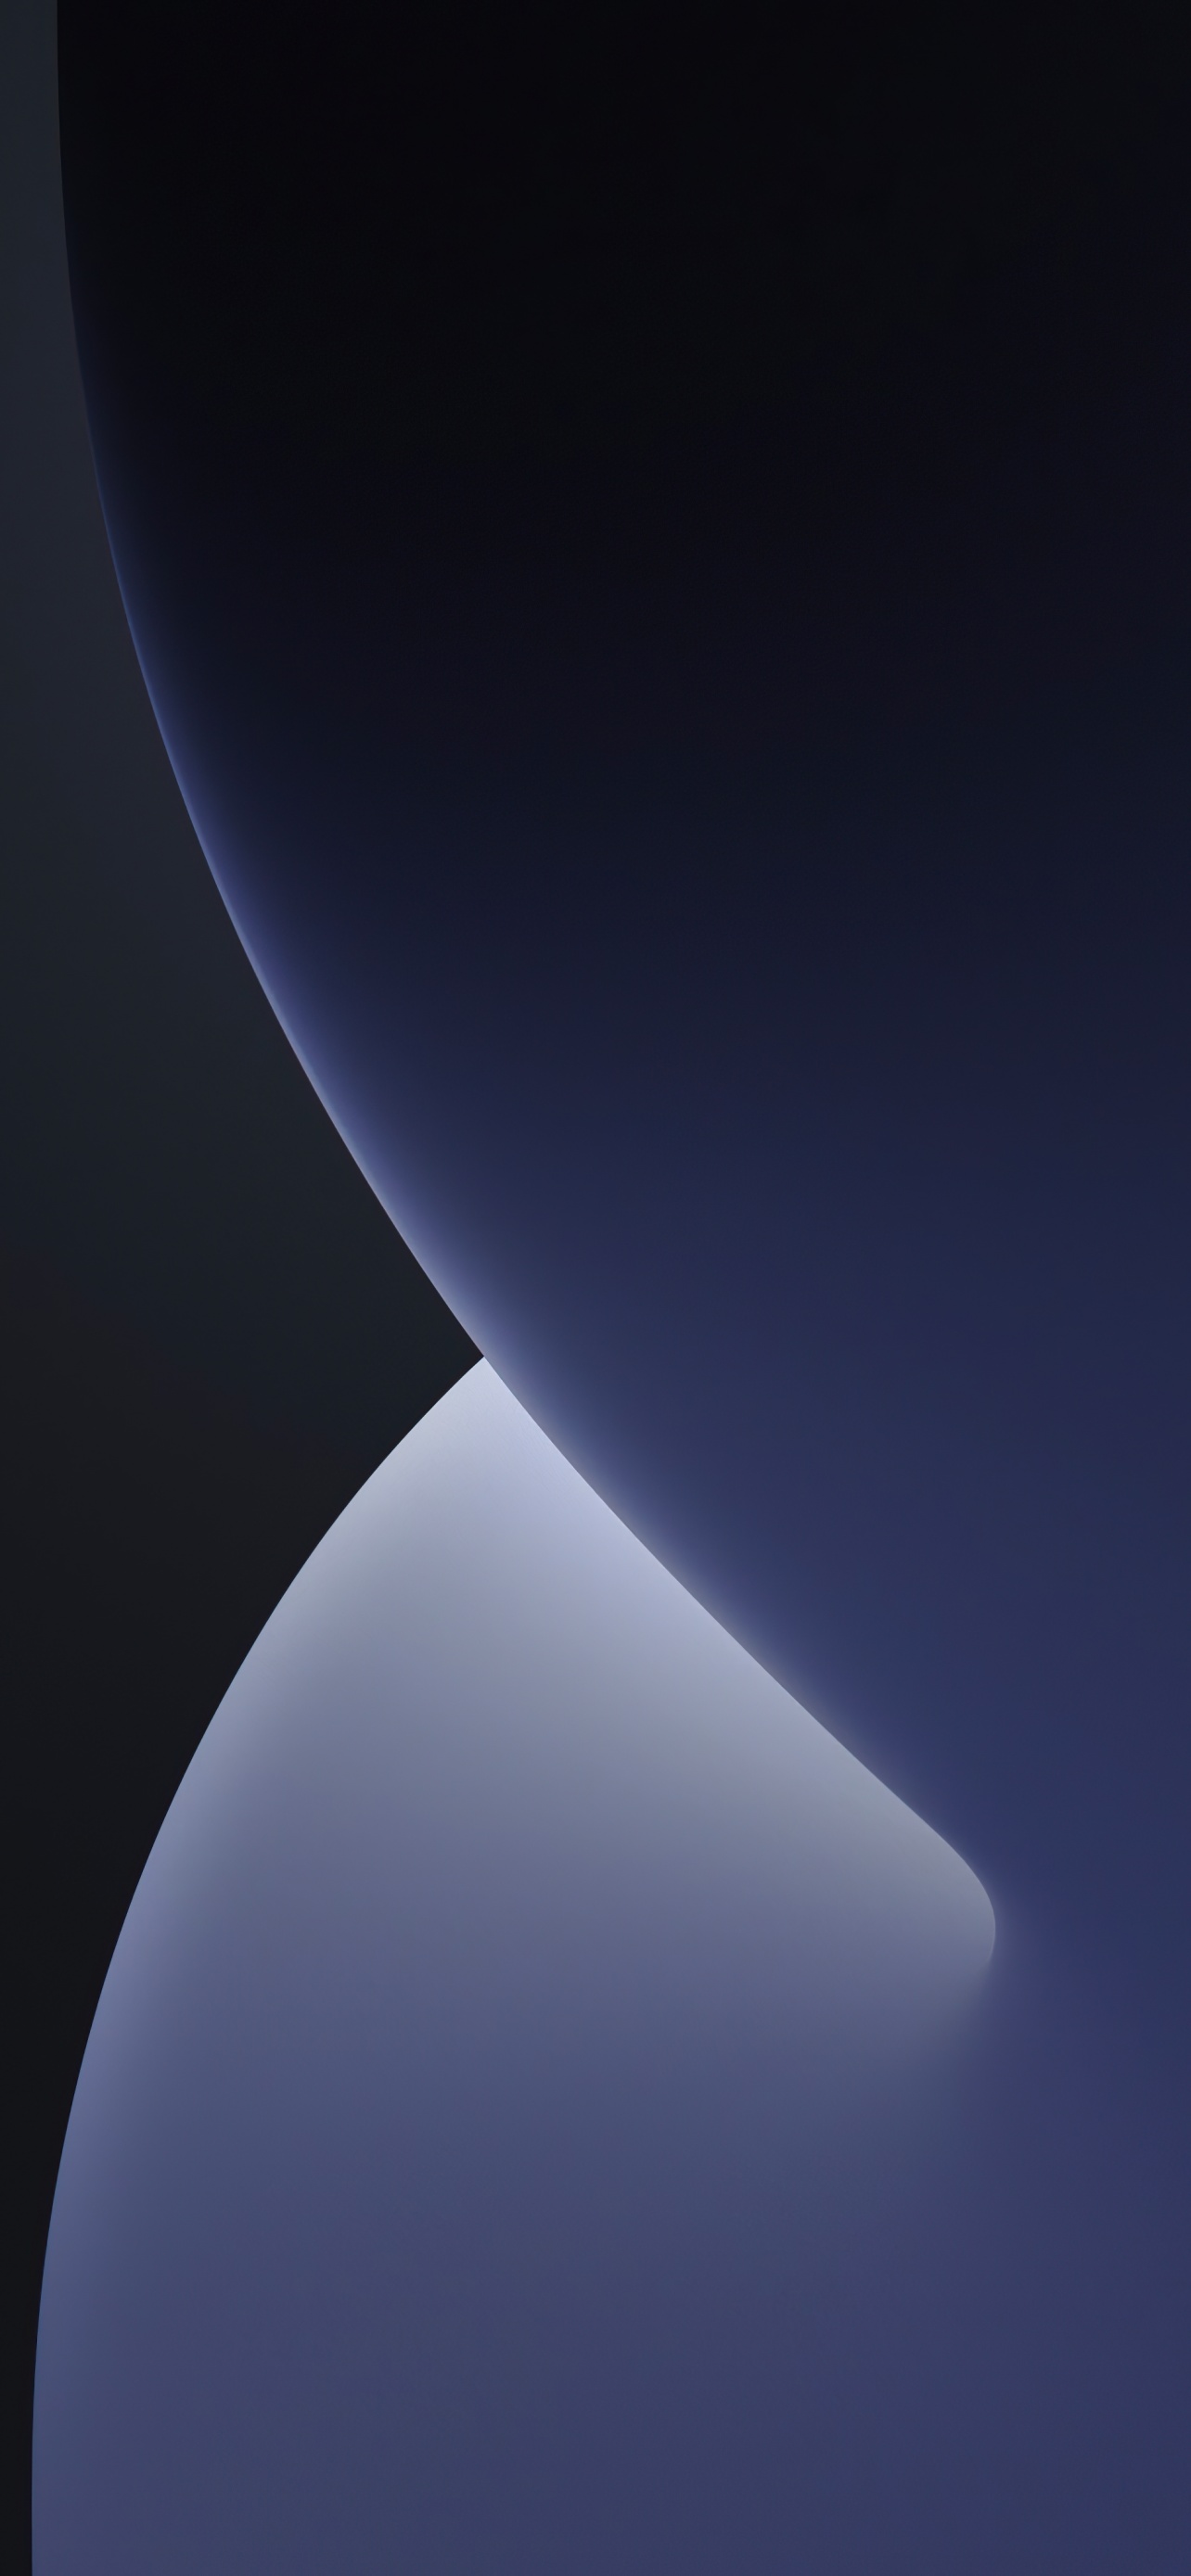 iOS 14 Wallpaper 4K, WWDC, 2020, iPhone 12, Black/Dark, #1447